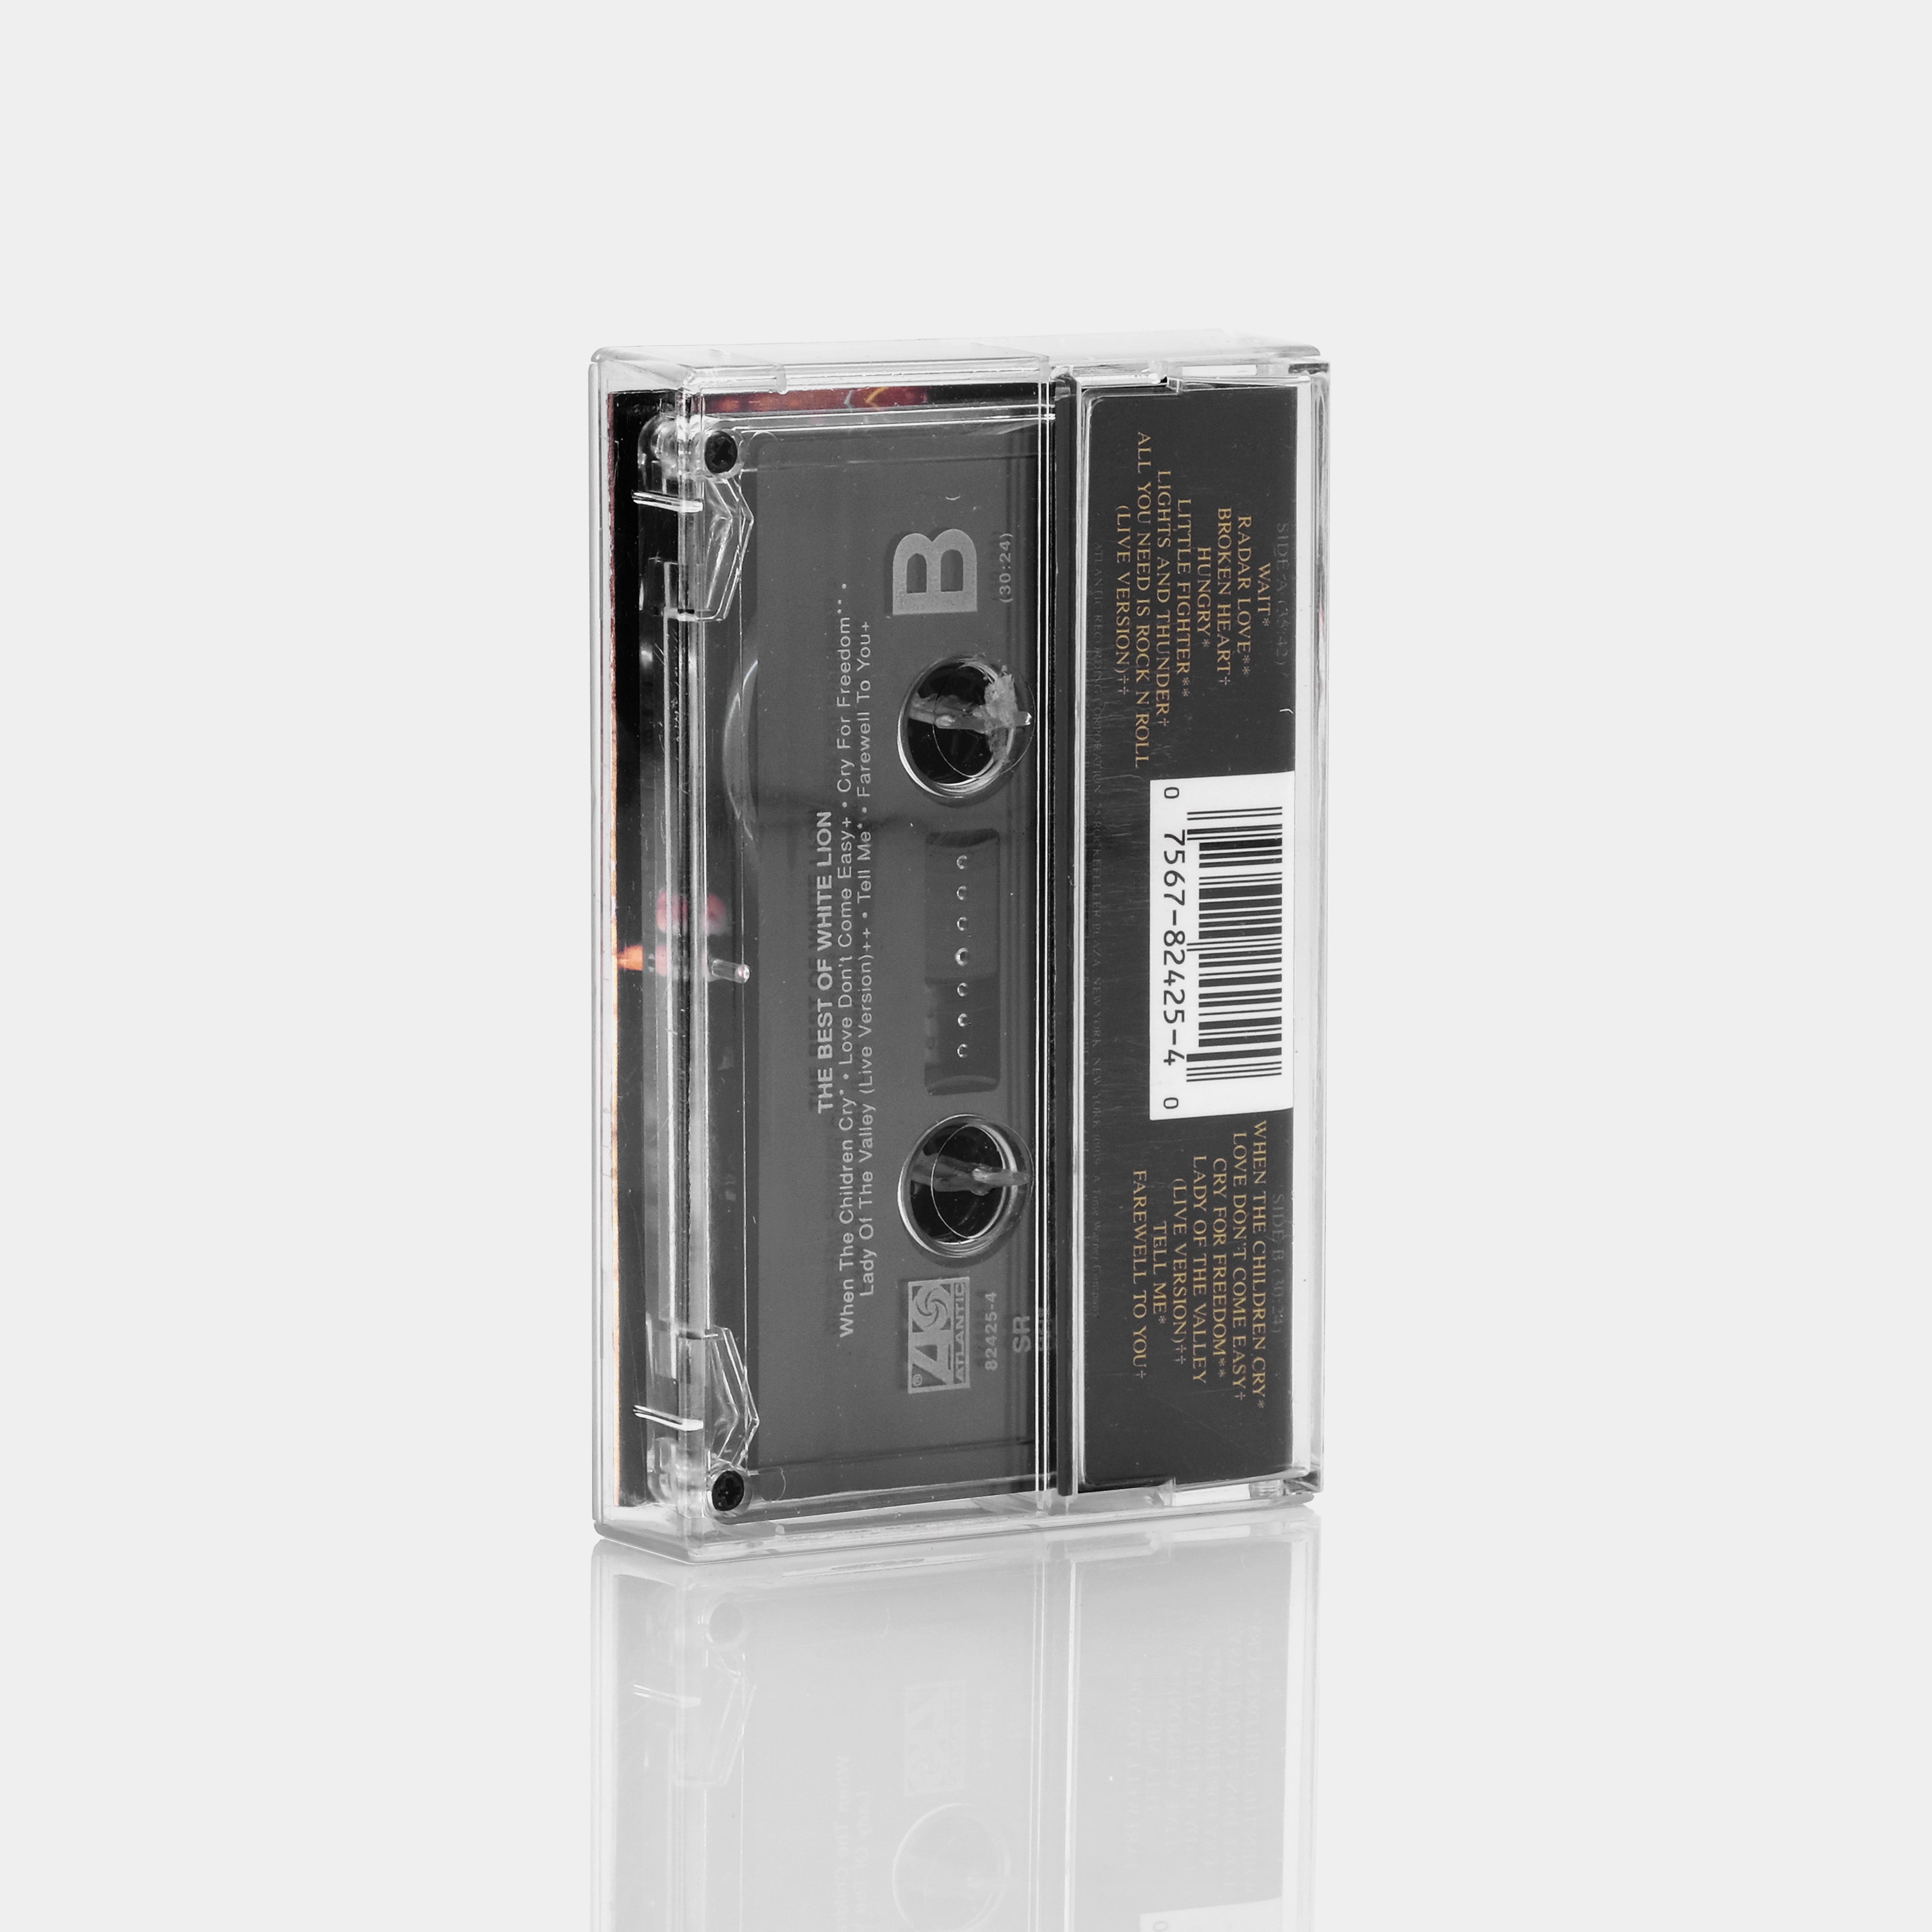 White Lion - The Best Of White Lion Cassette Tape